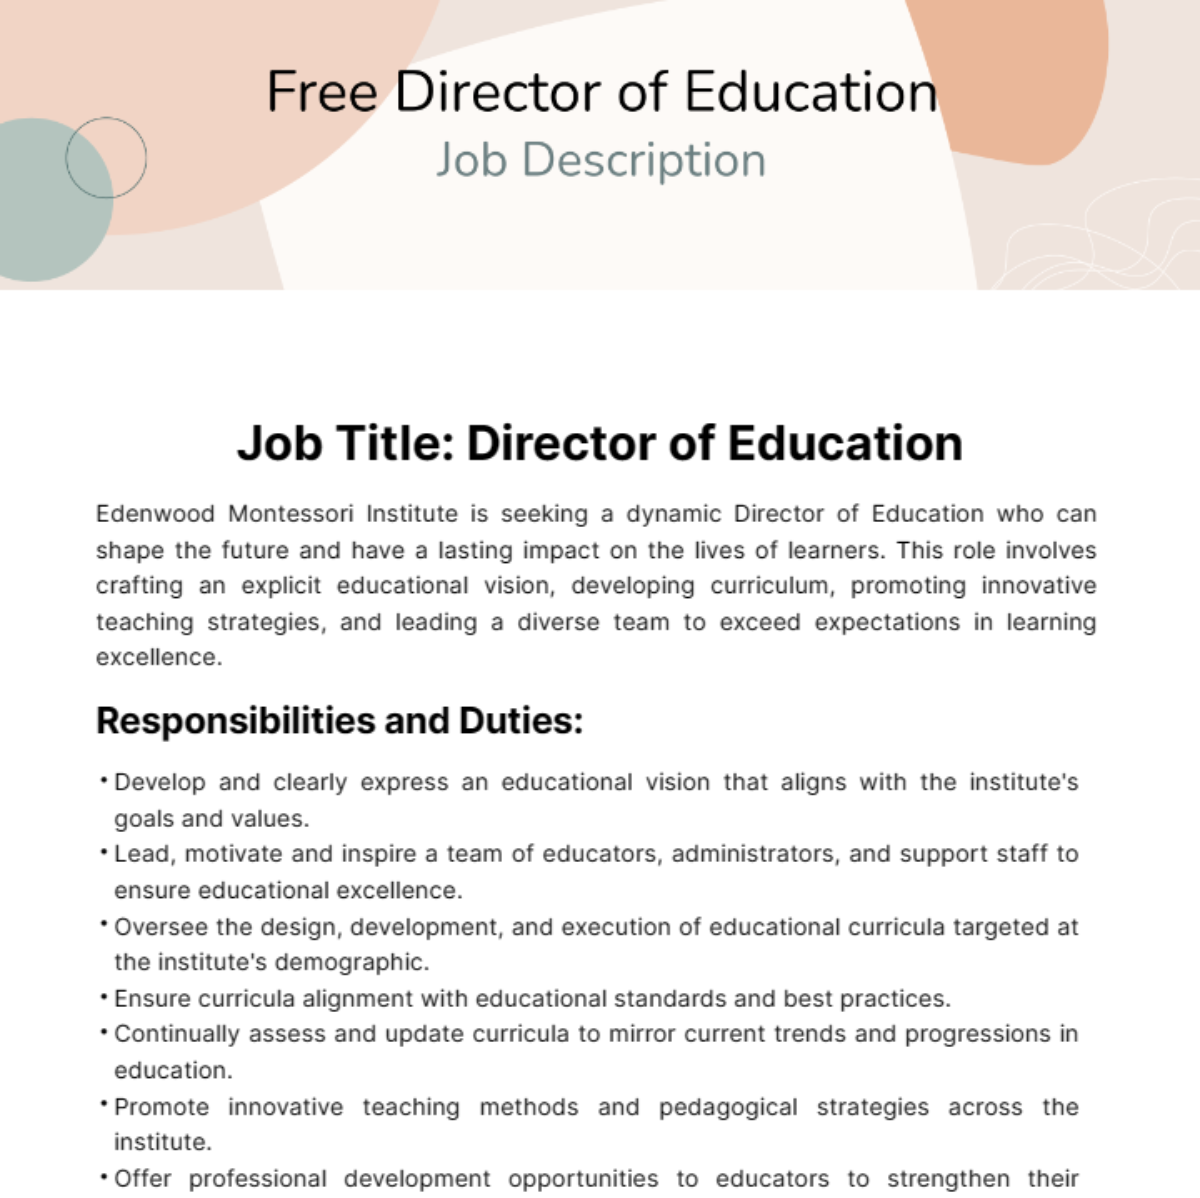 Free Director of Education Job Description Template